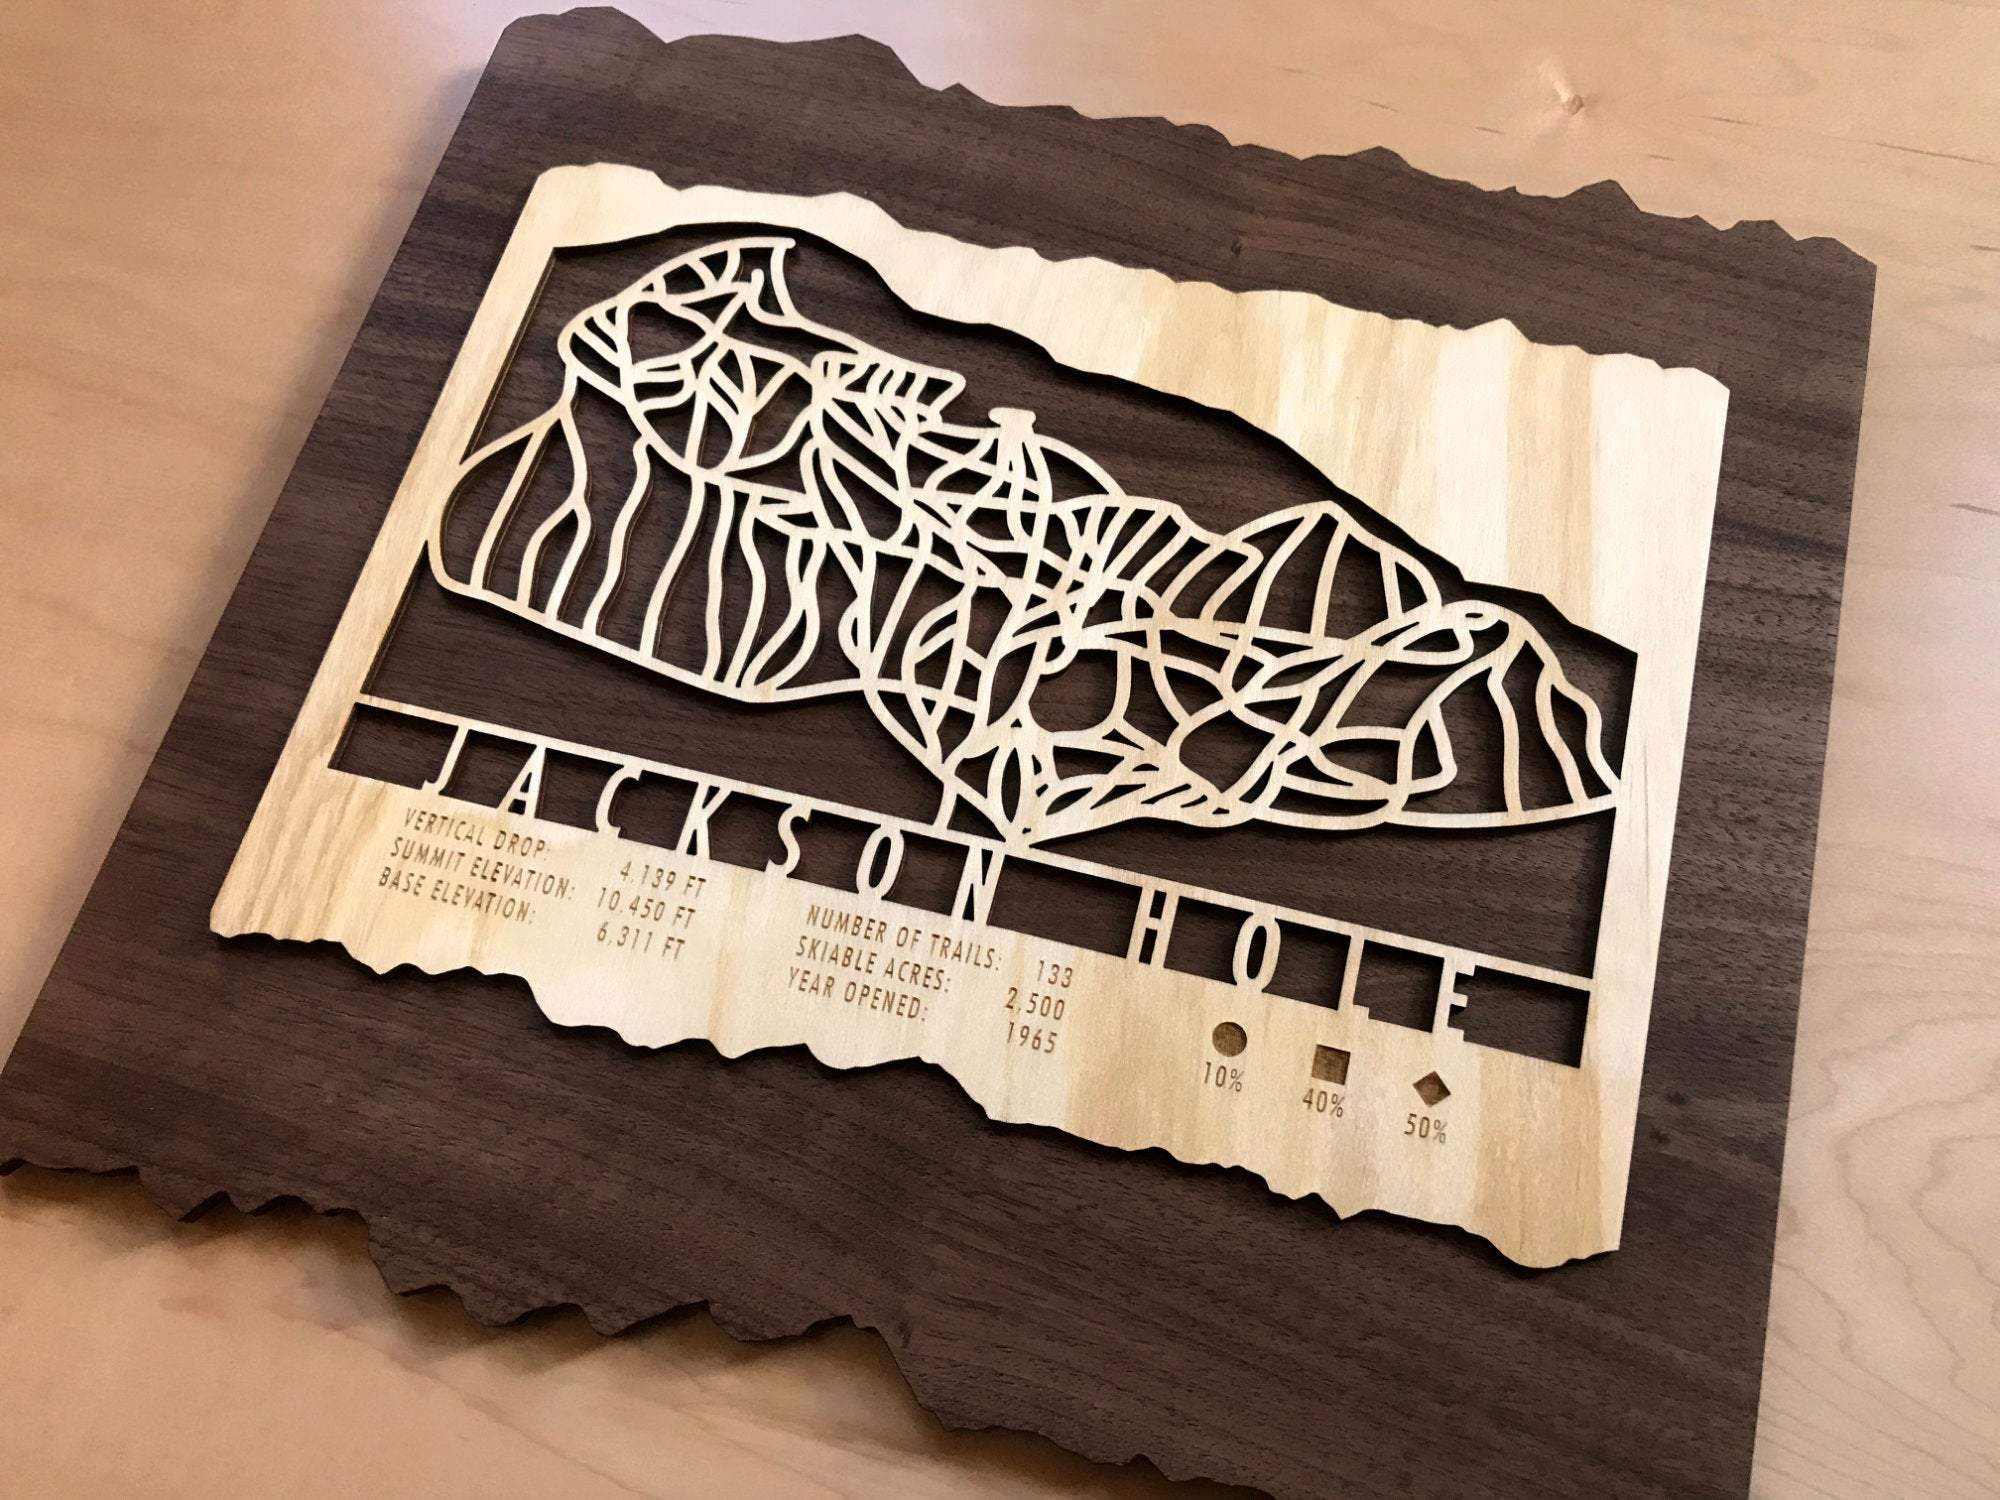 Jackson Hole Ski Decor Trail Map Art - MountainCut